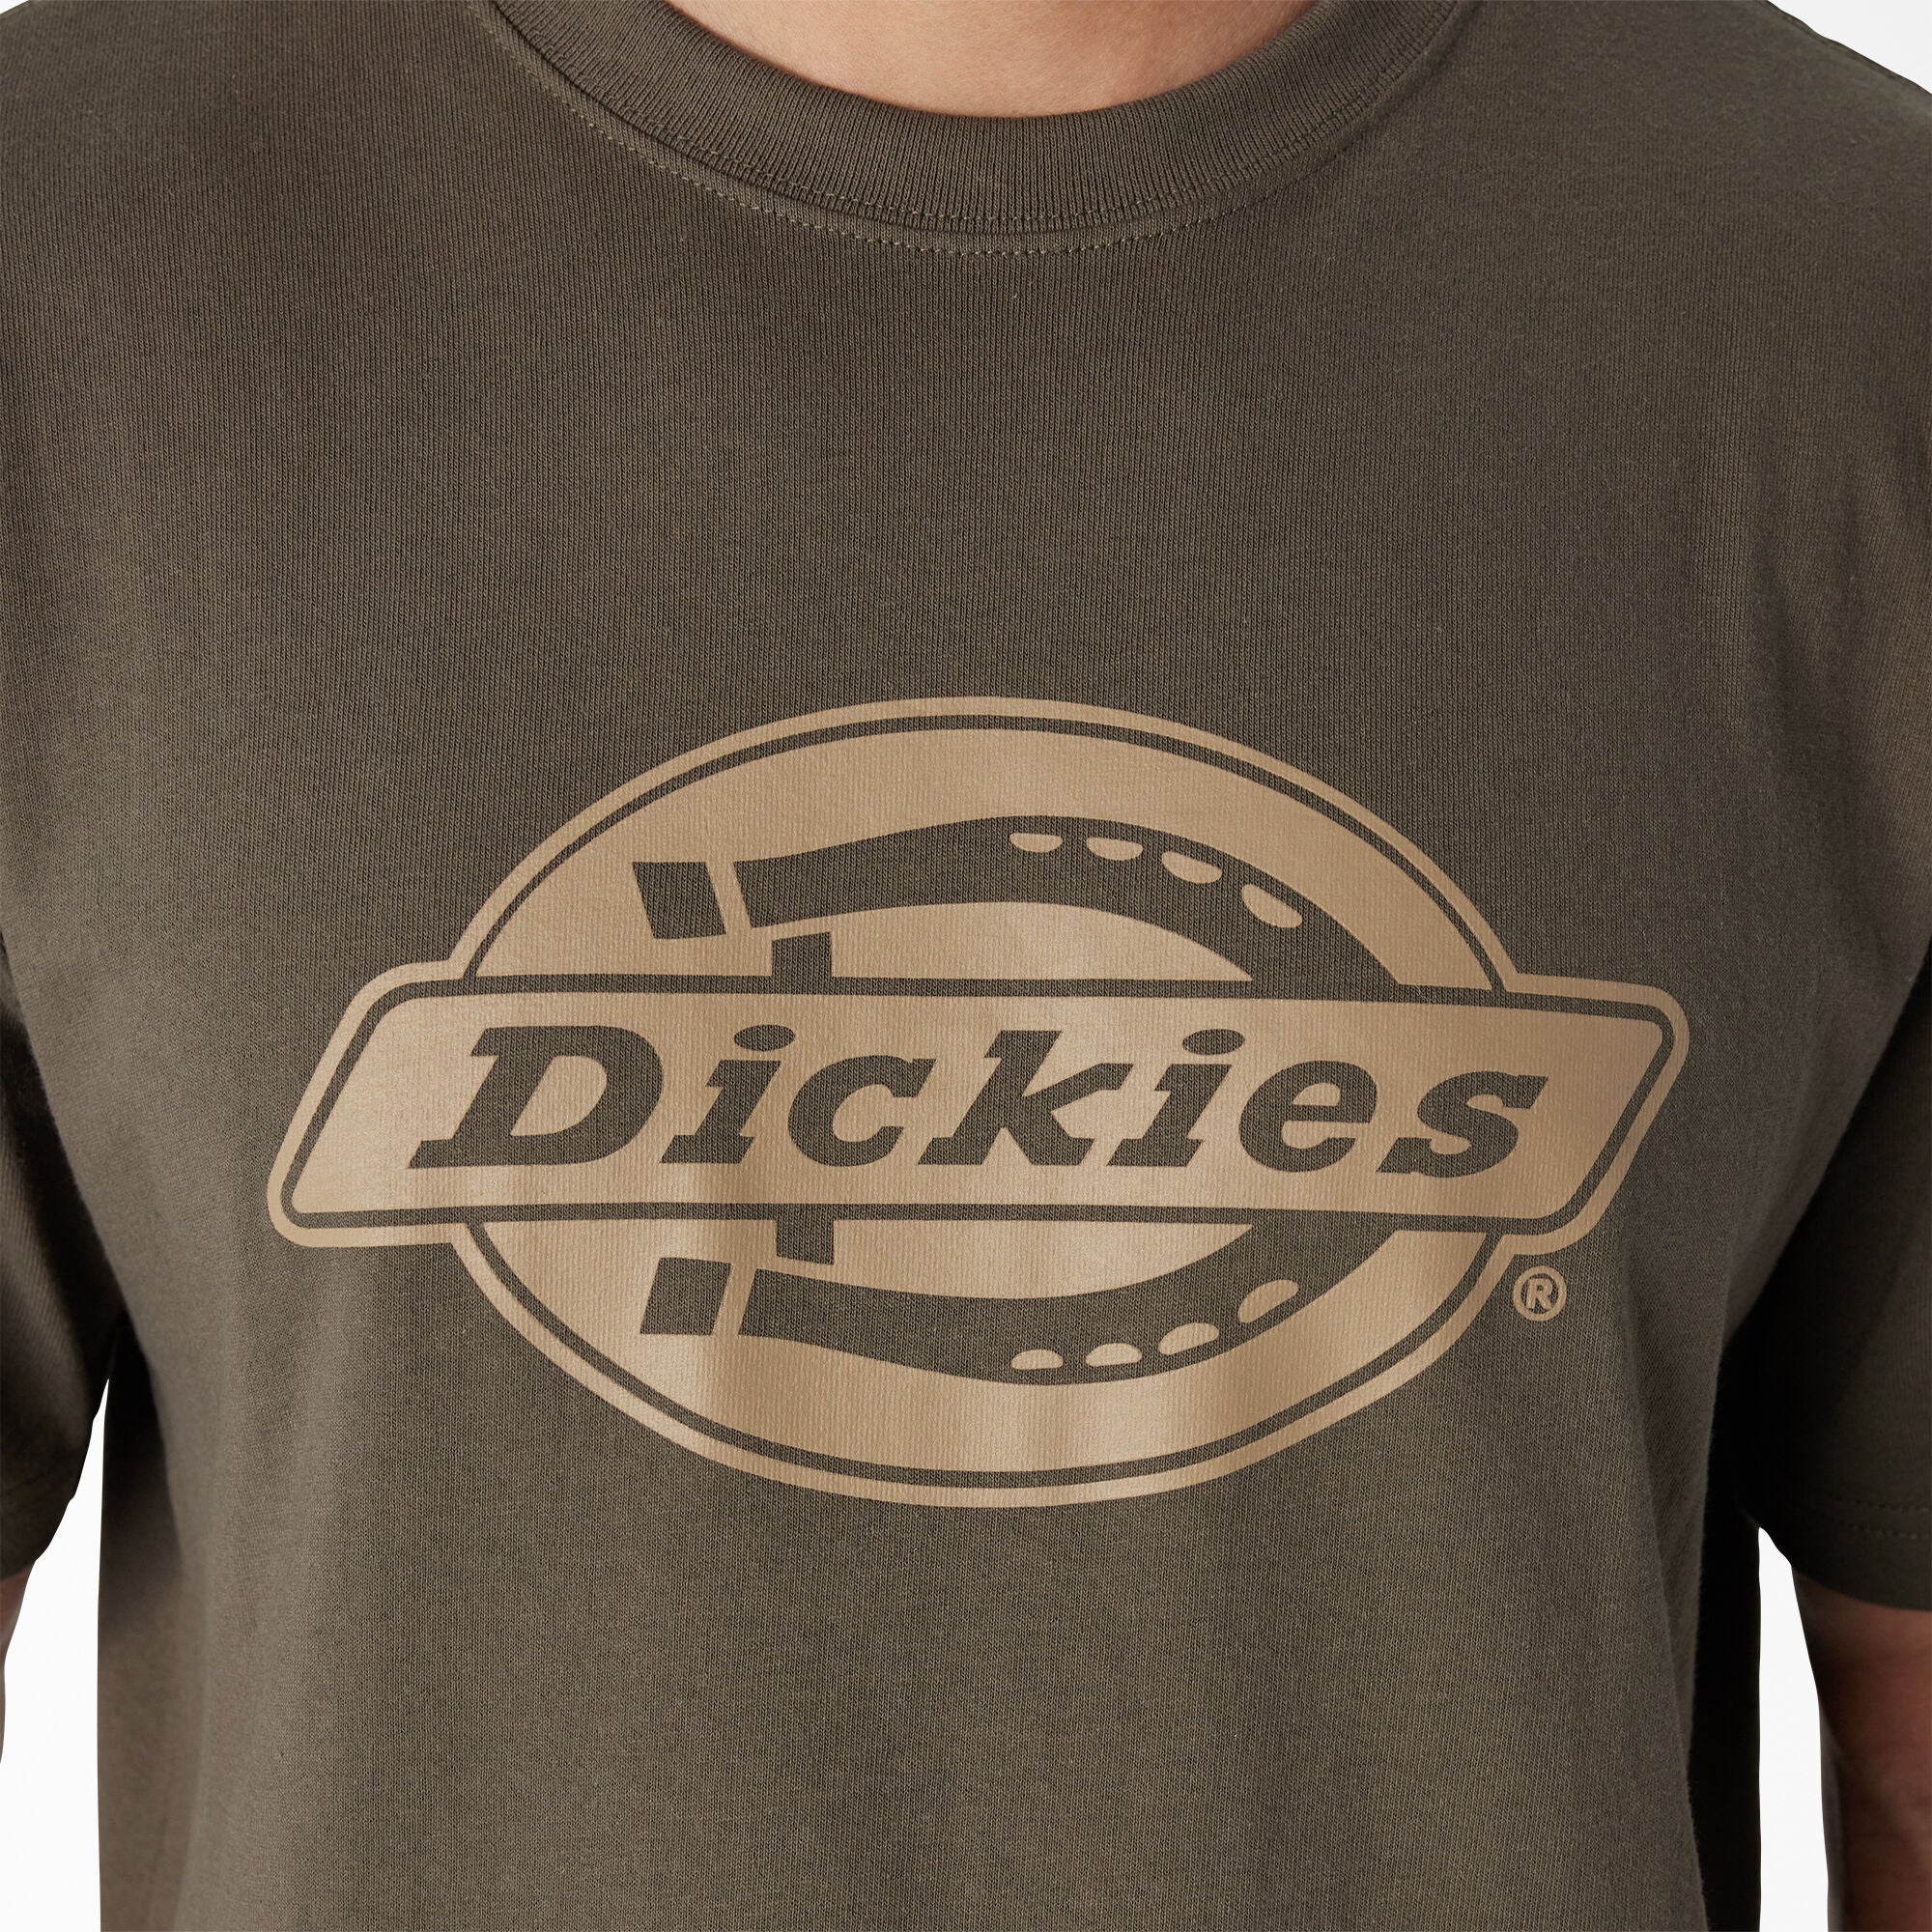 Dickies Men's Short Sleeve Heavyweight Logo T-Shirt